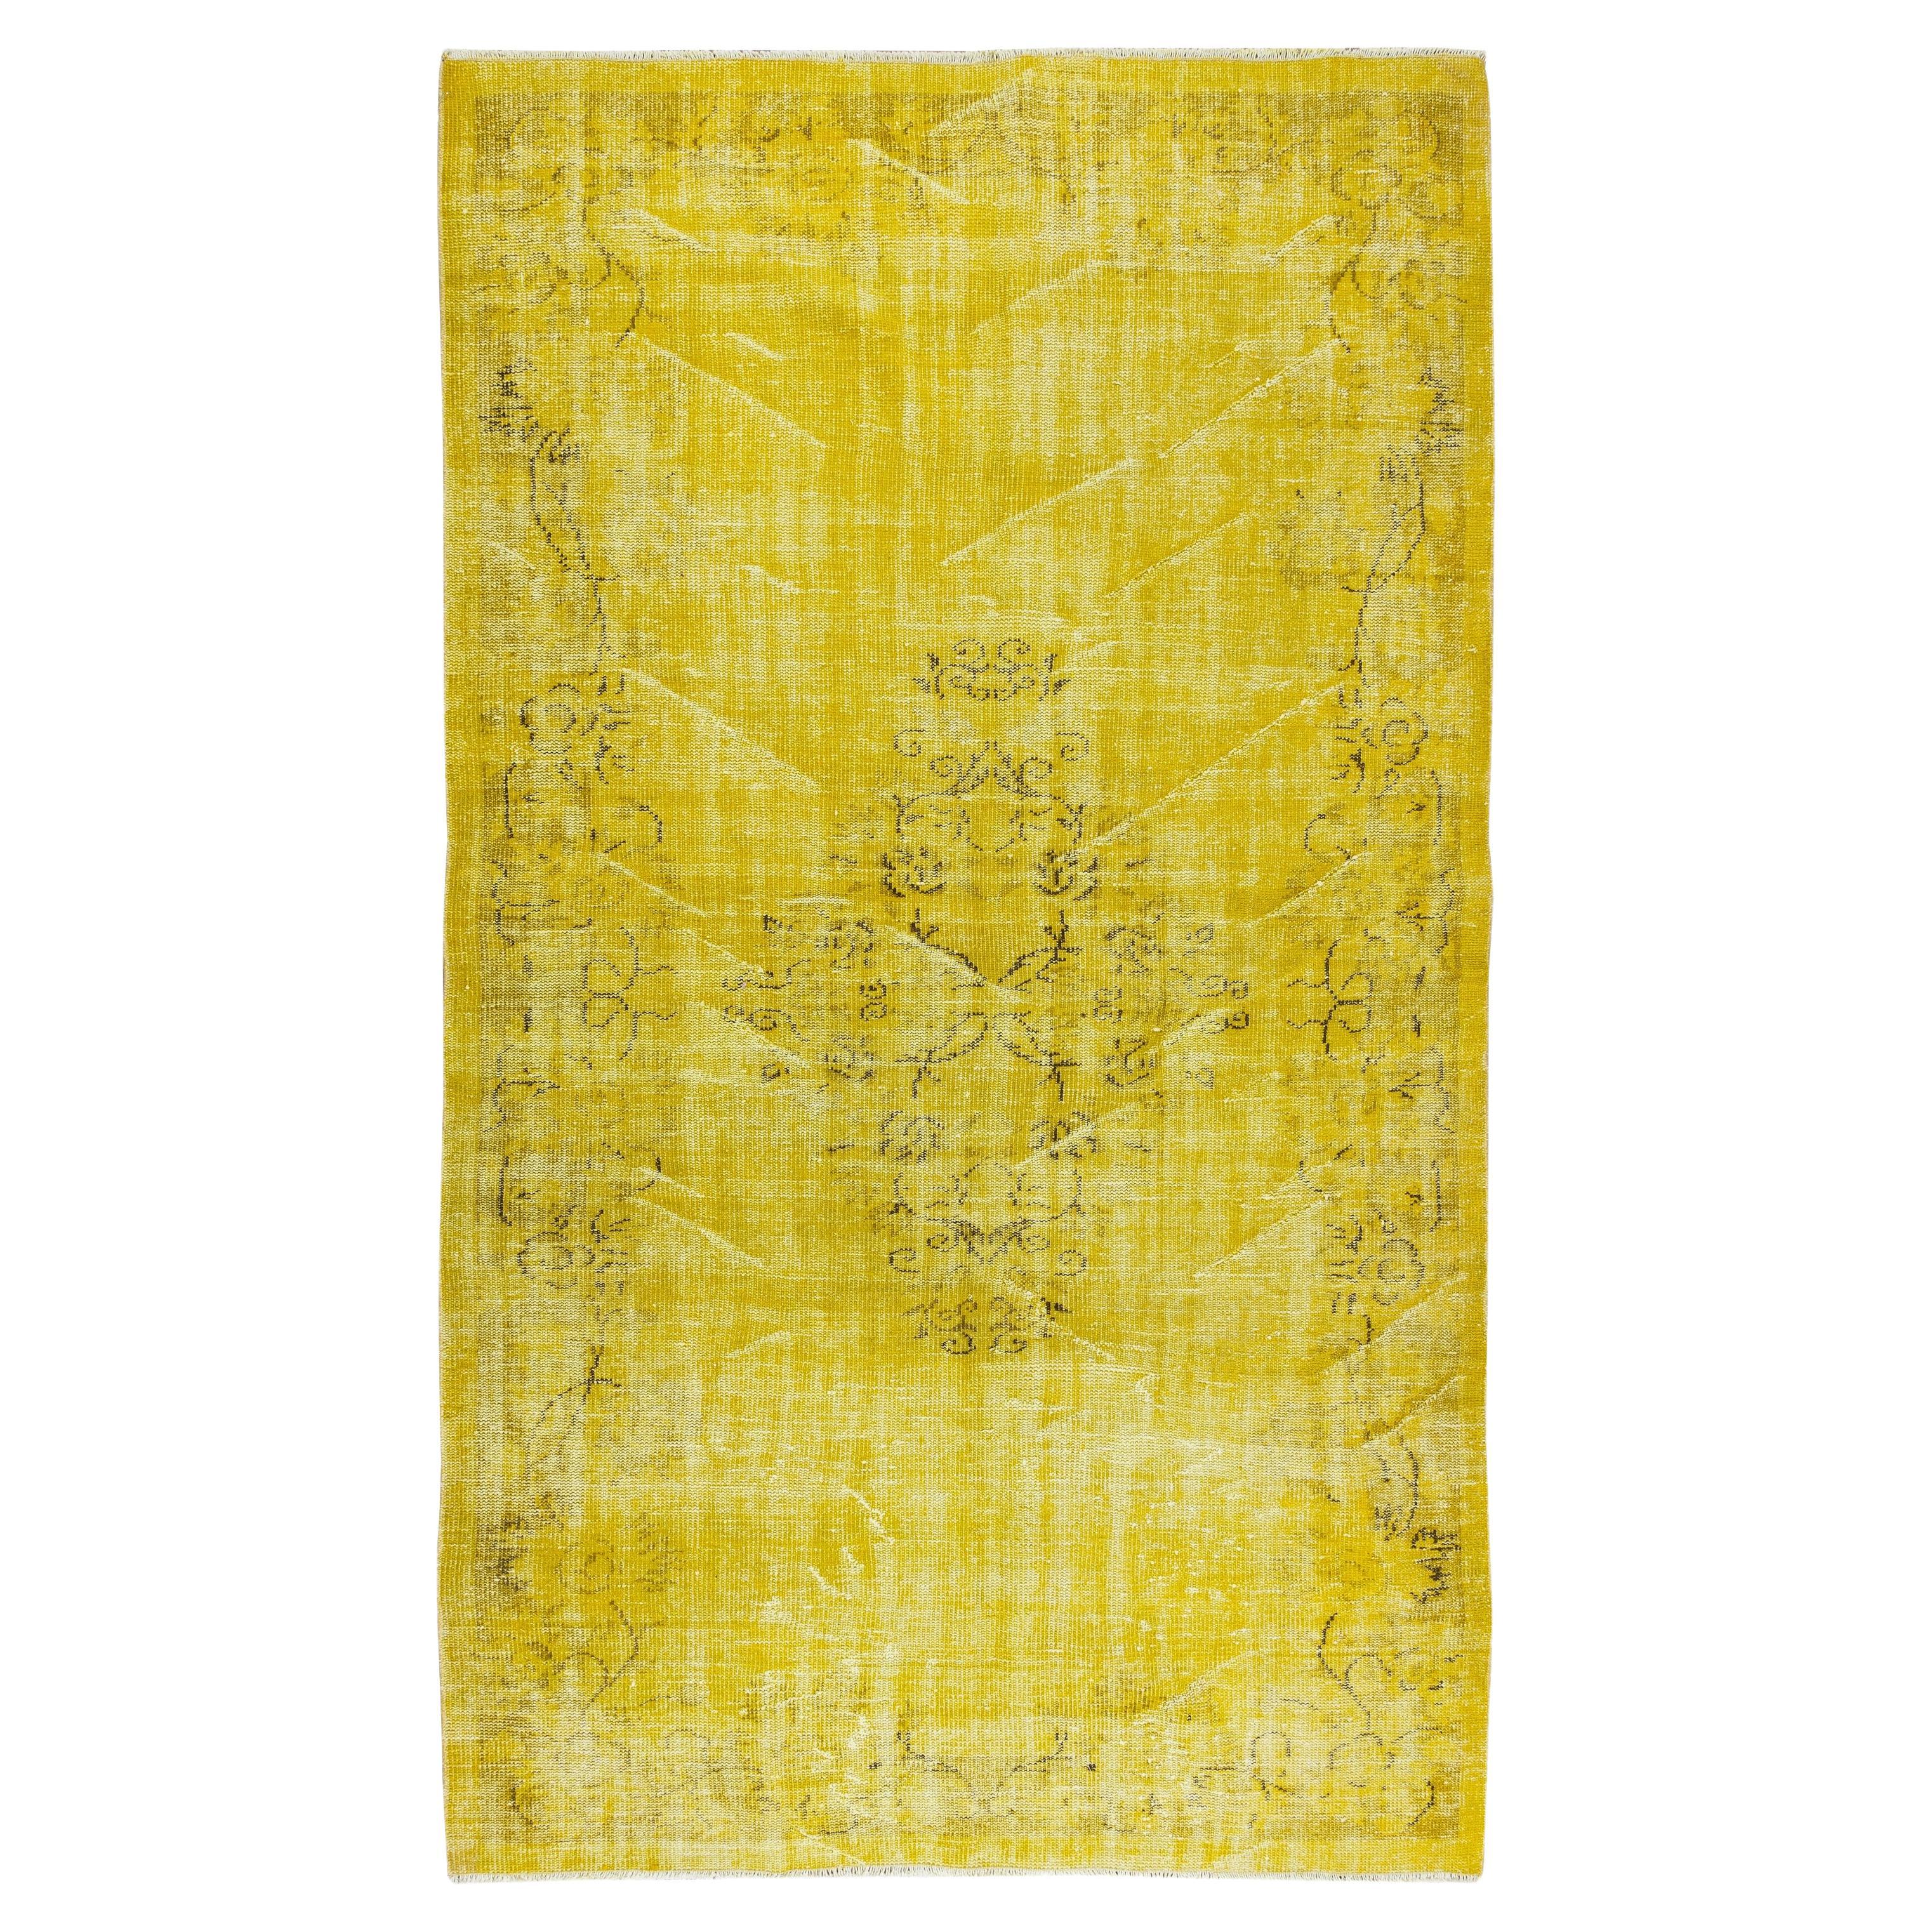 5.6x9.7 Ft Yellow Overdyed Rug for Modern Home & Office, Turkish Handmade Carpet